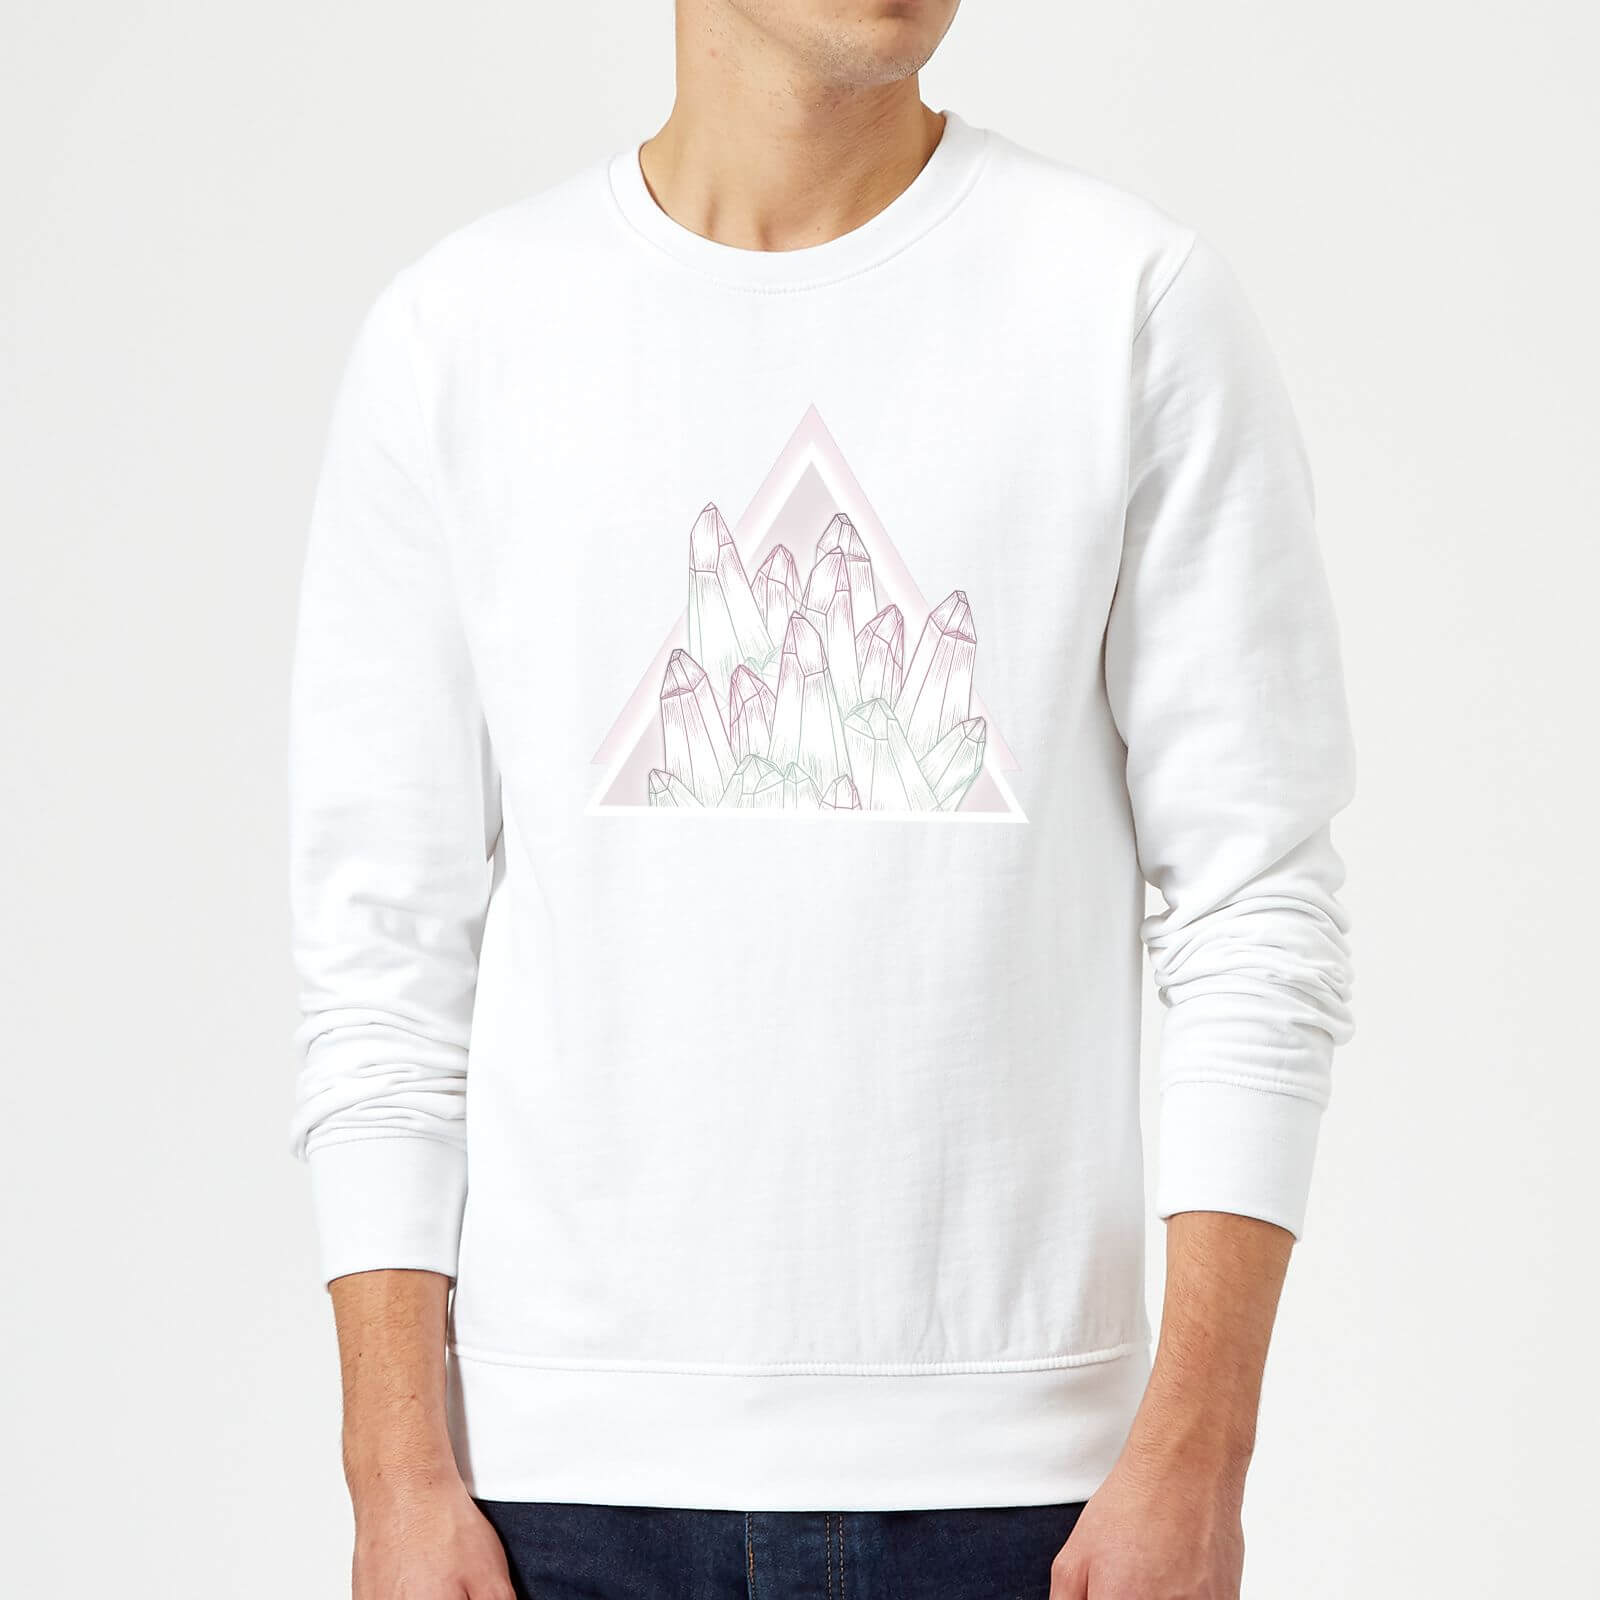 Barlena Crystals Sweatshirt - White - S - White